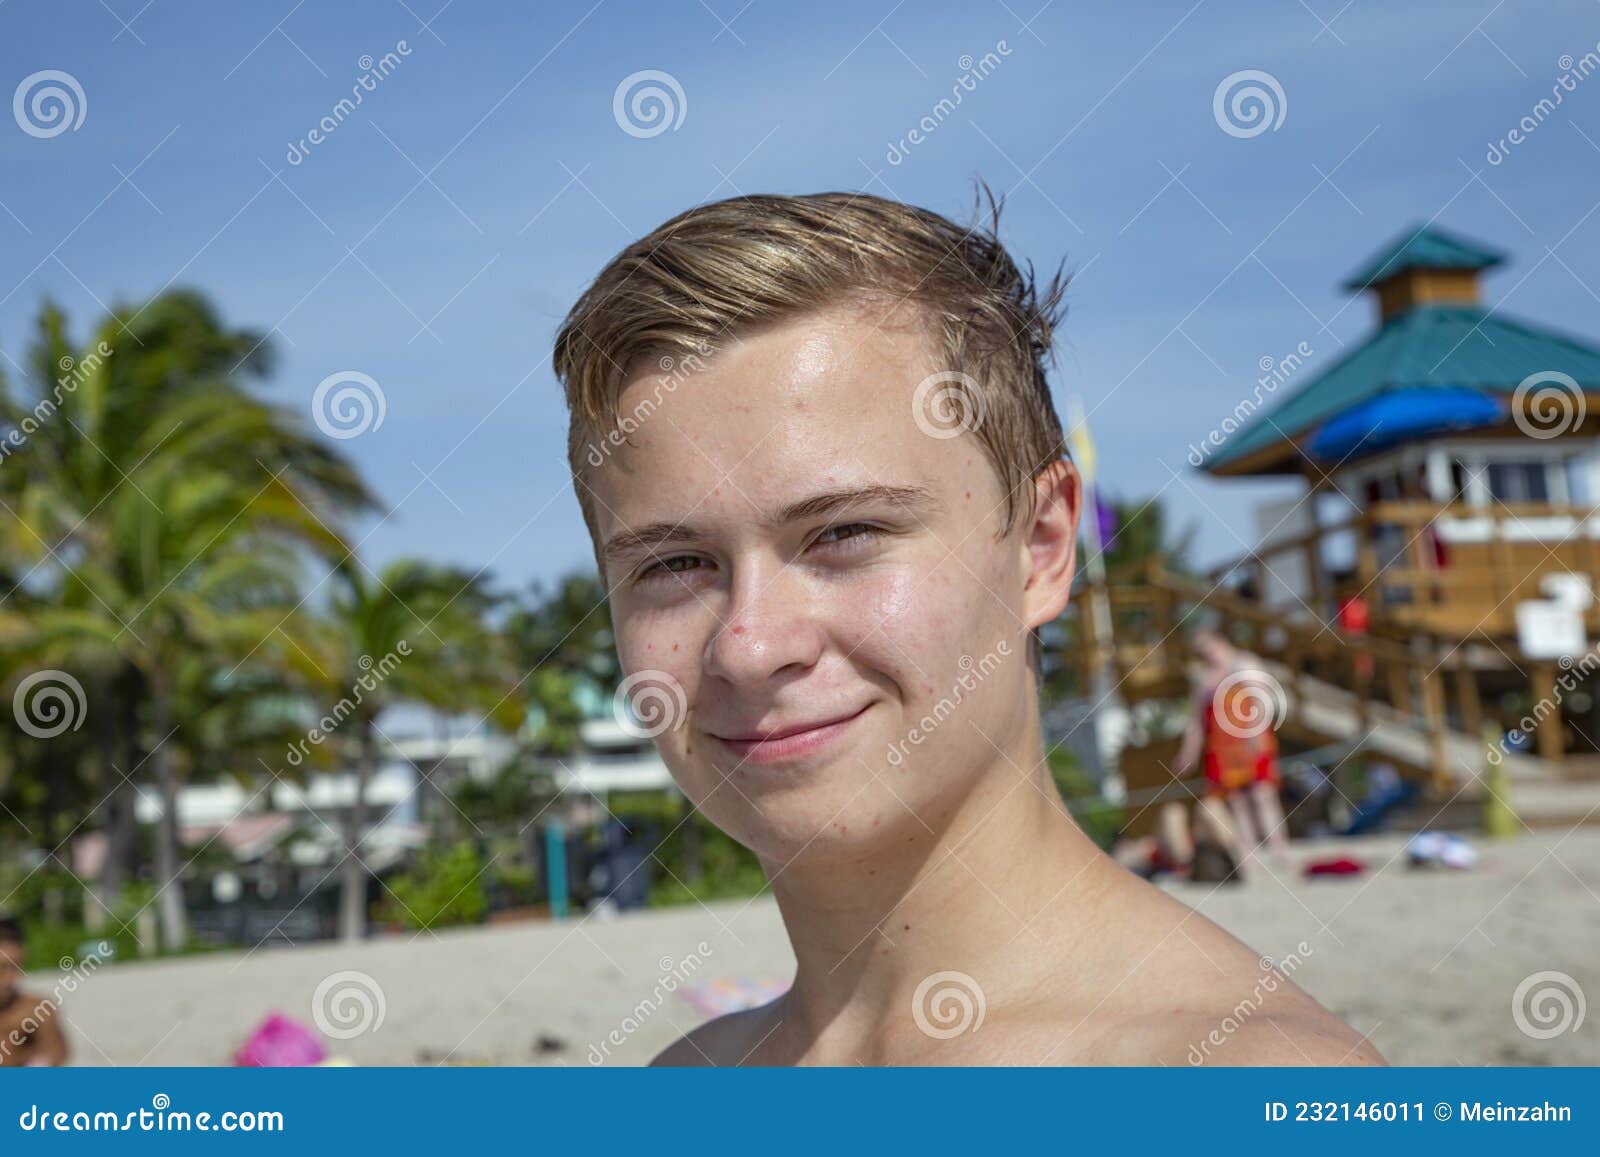 Cute Happy Teenage Boy Enjoys the Beach in Miami Stock Image - Image of ...